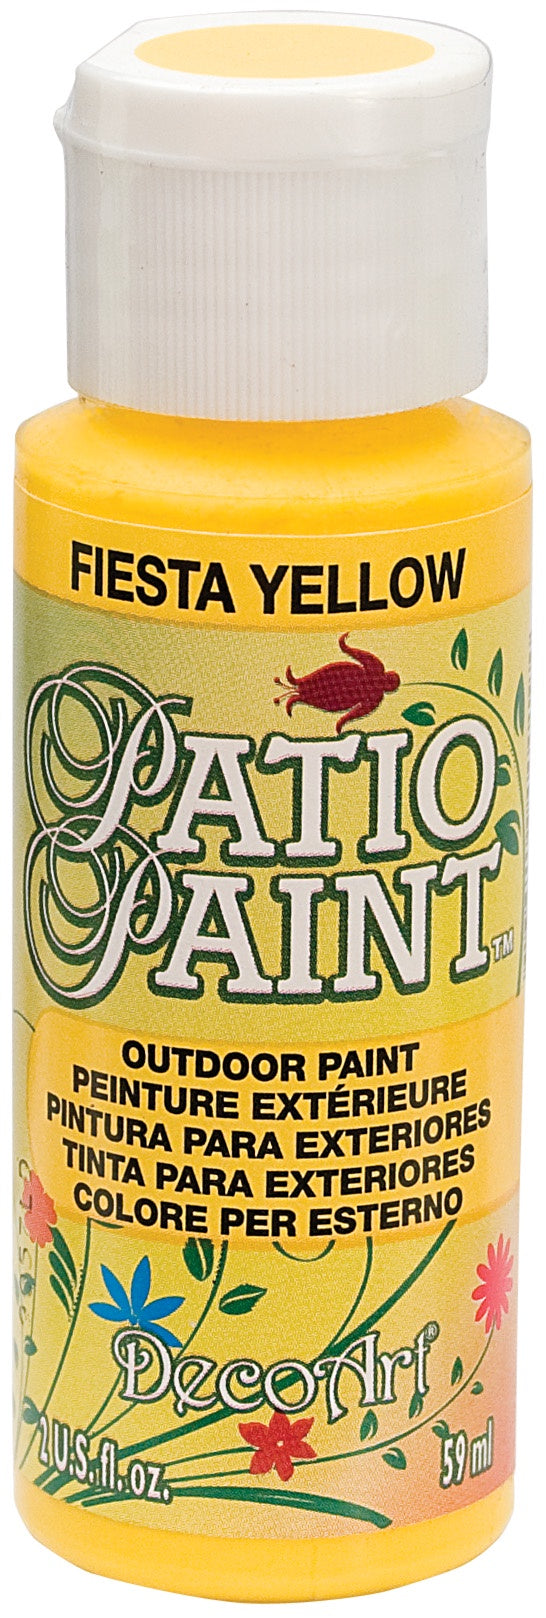 Deco Art Patio Paint 2oz - Fiesta Yellow